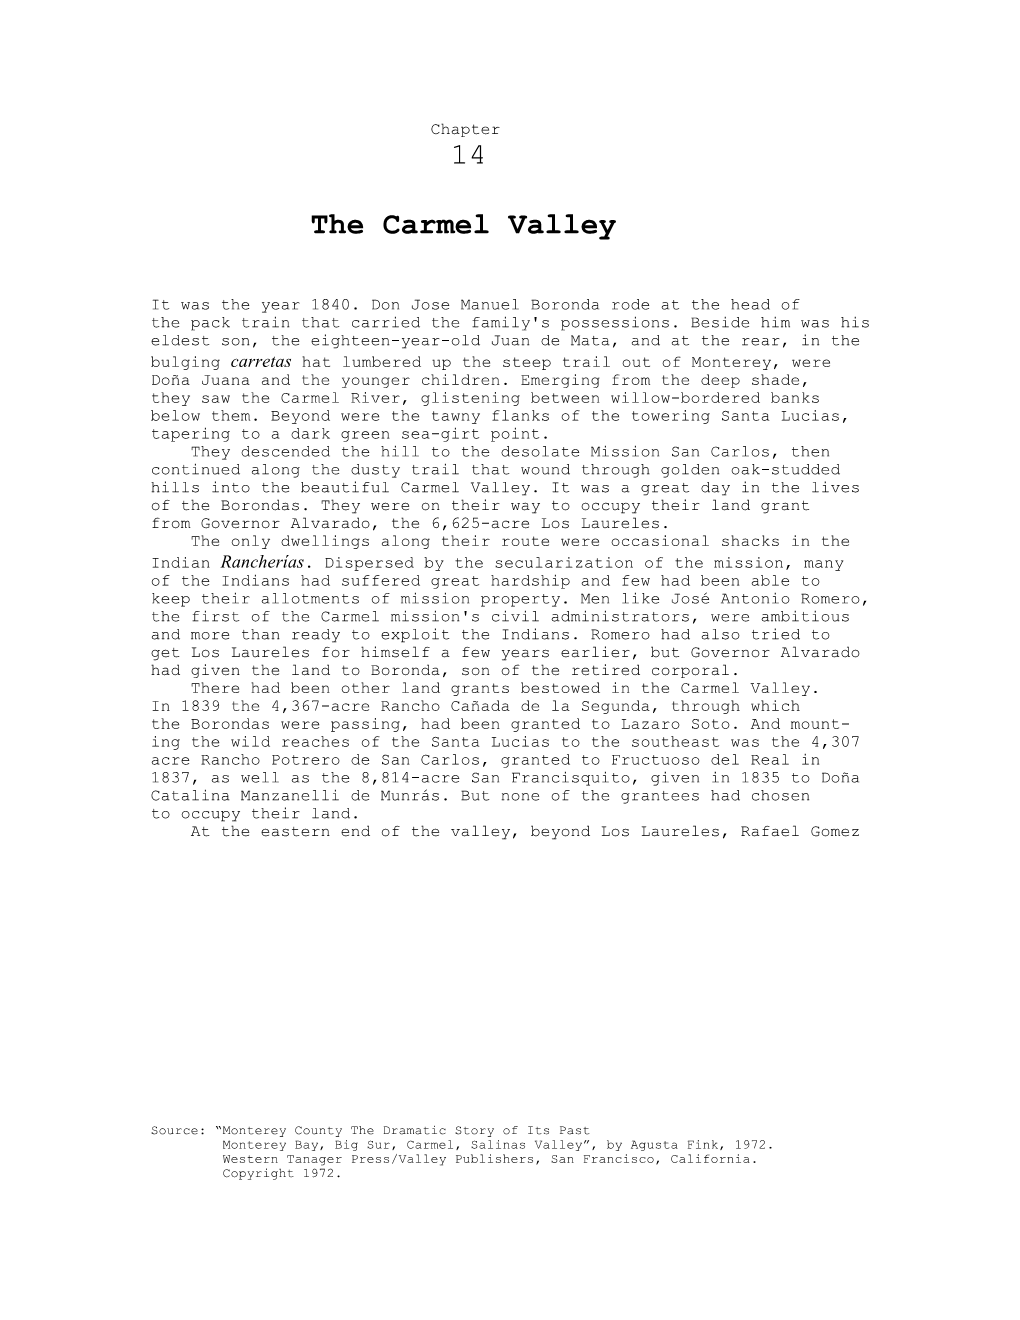 The Carmel Valley